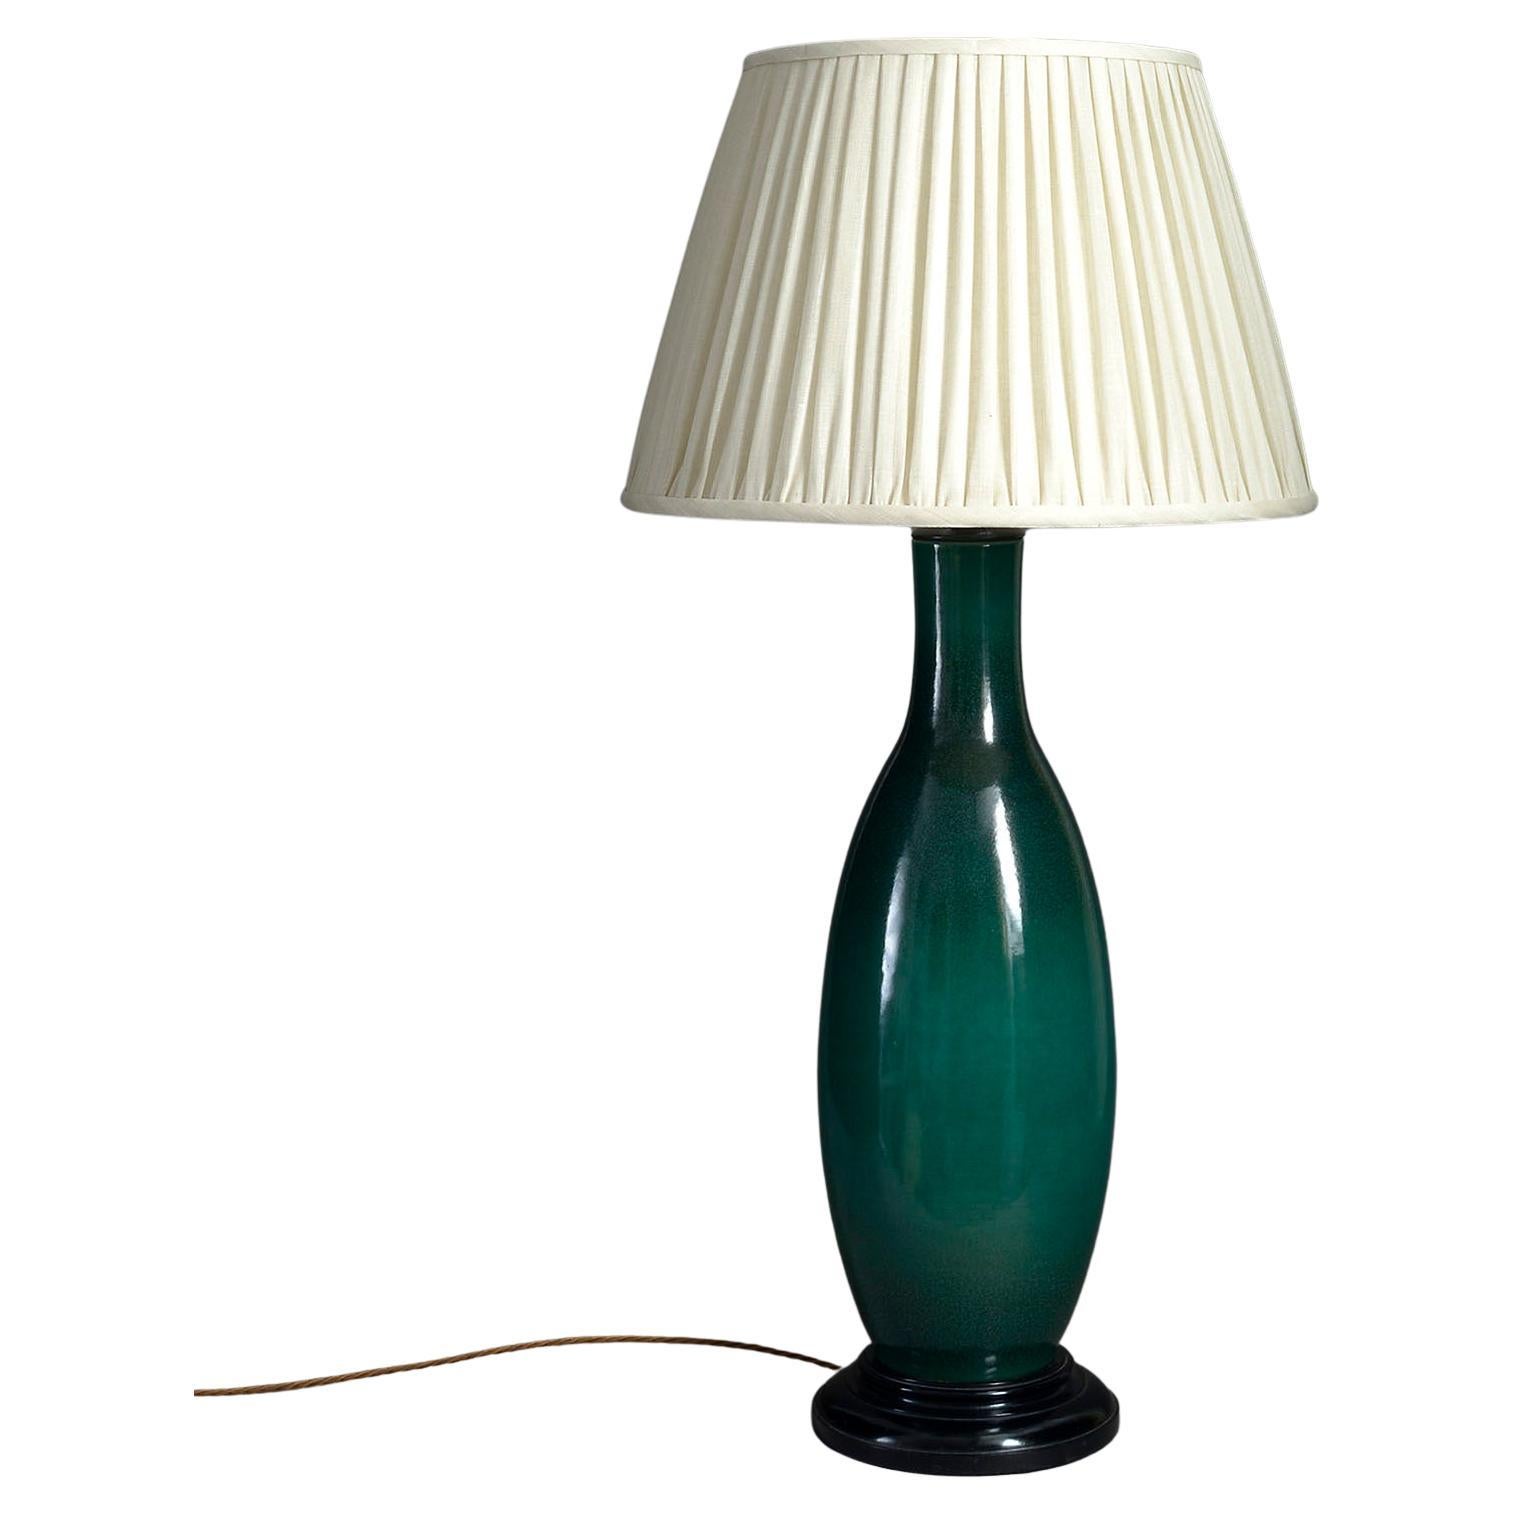 Tall 20th Century Green Glazed Ceramic Vase Lamp For Sale